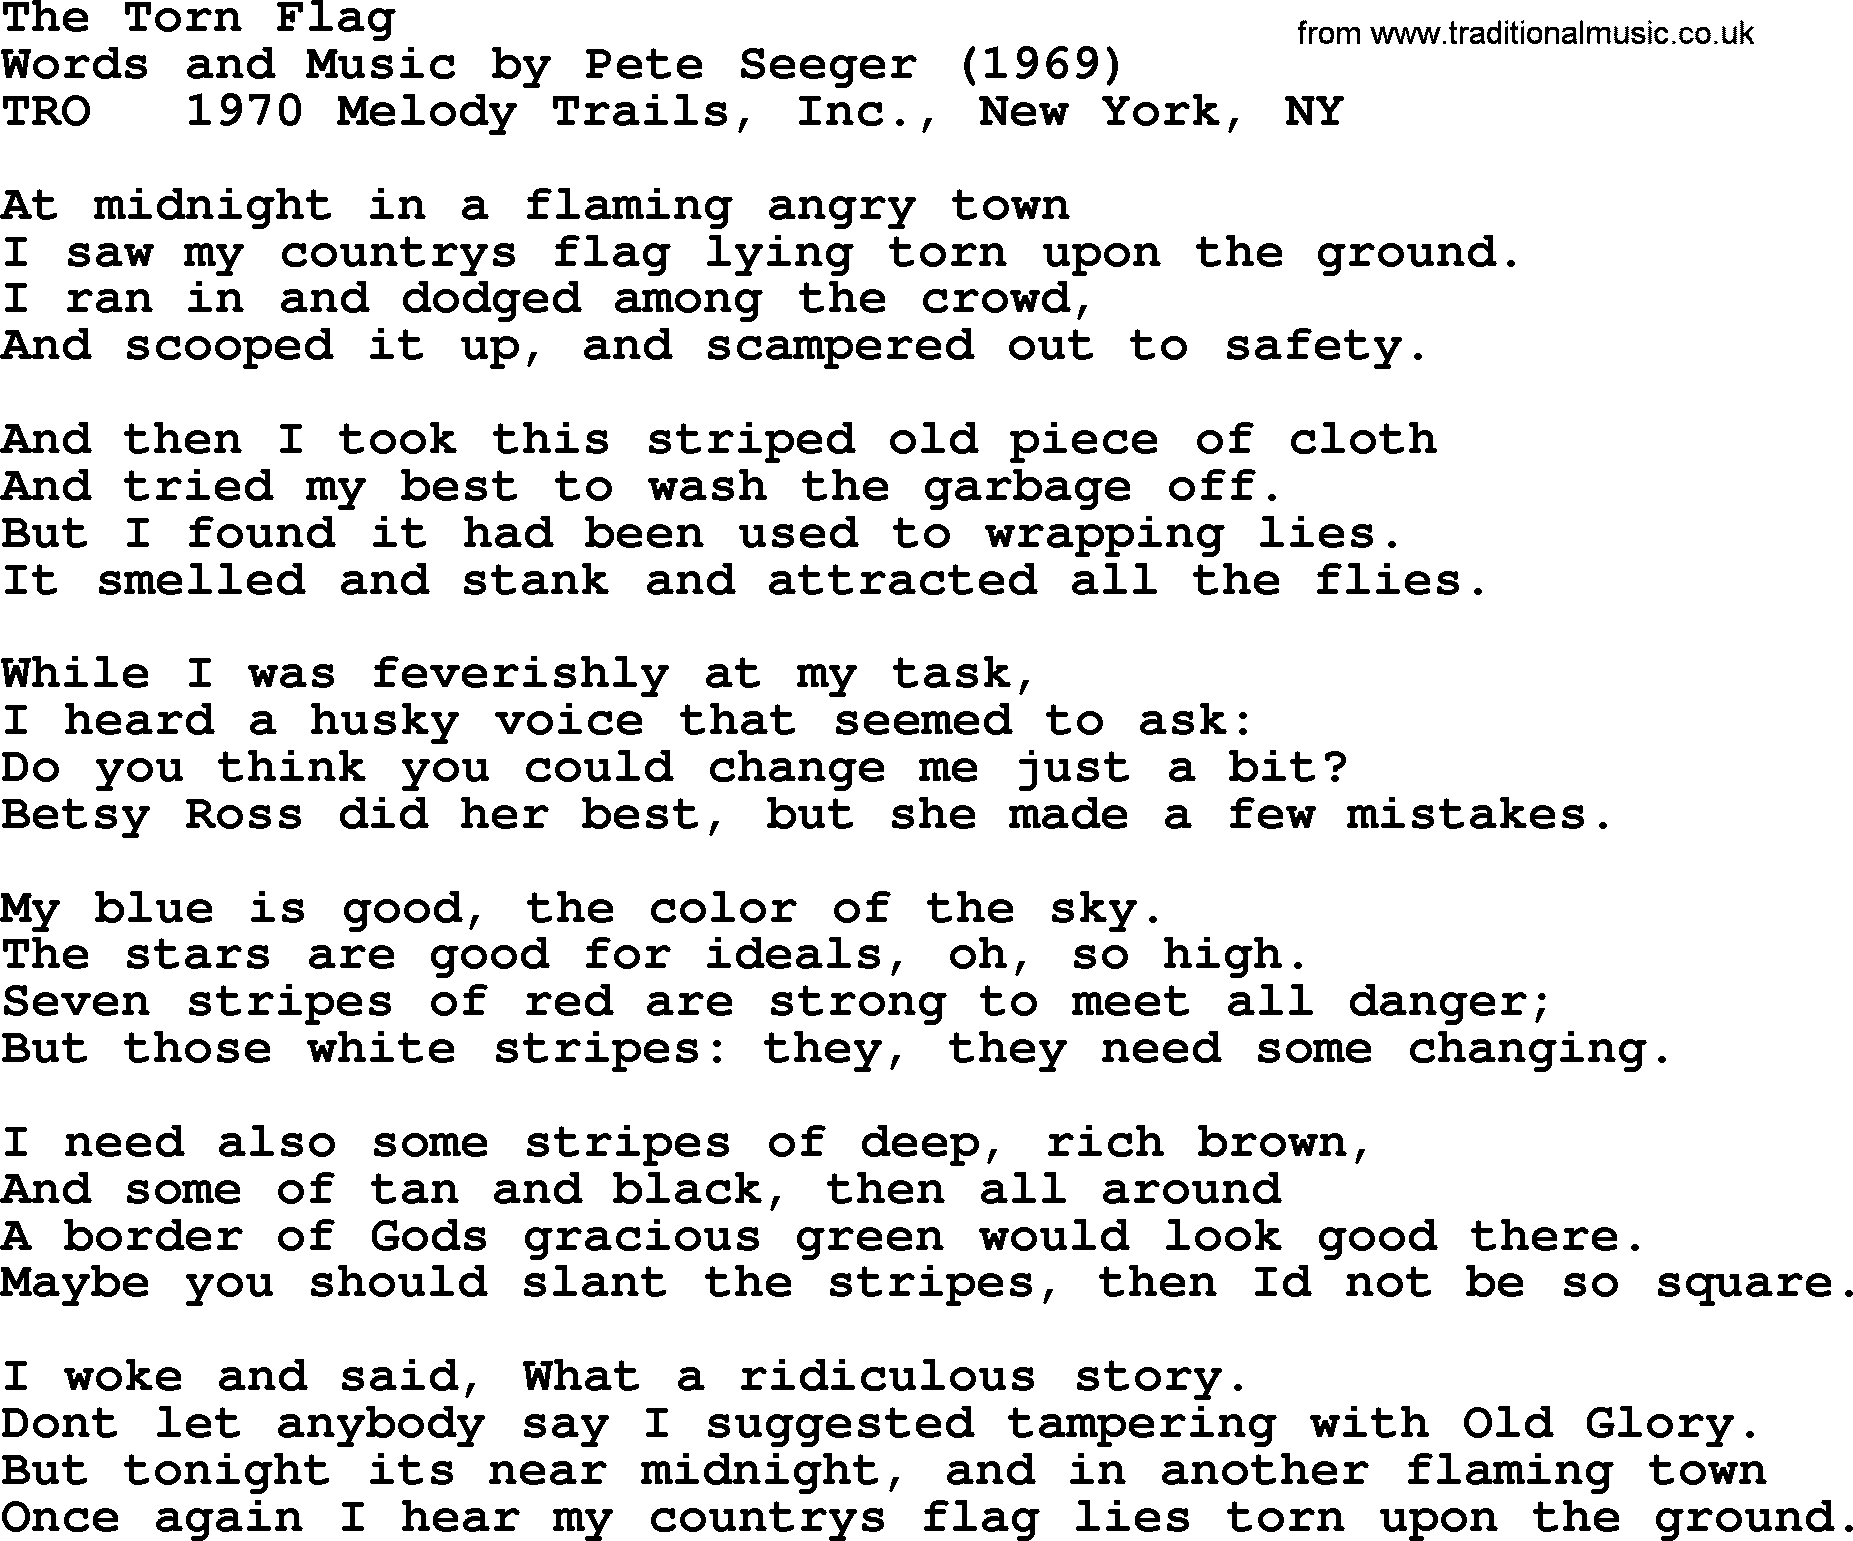 Pete Seeger song The Torn Flag-Pete-Seeger.txt lyrics